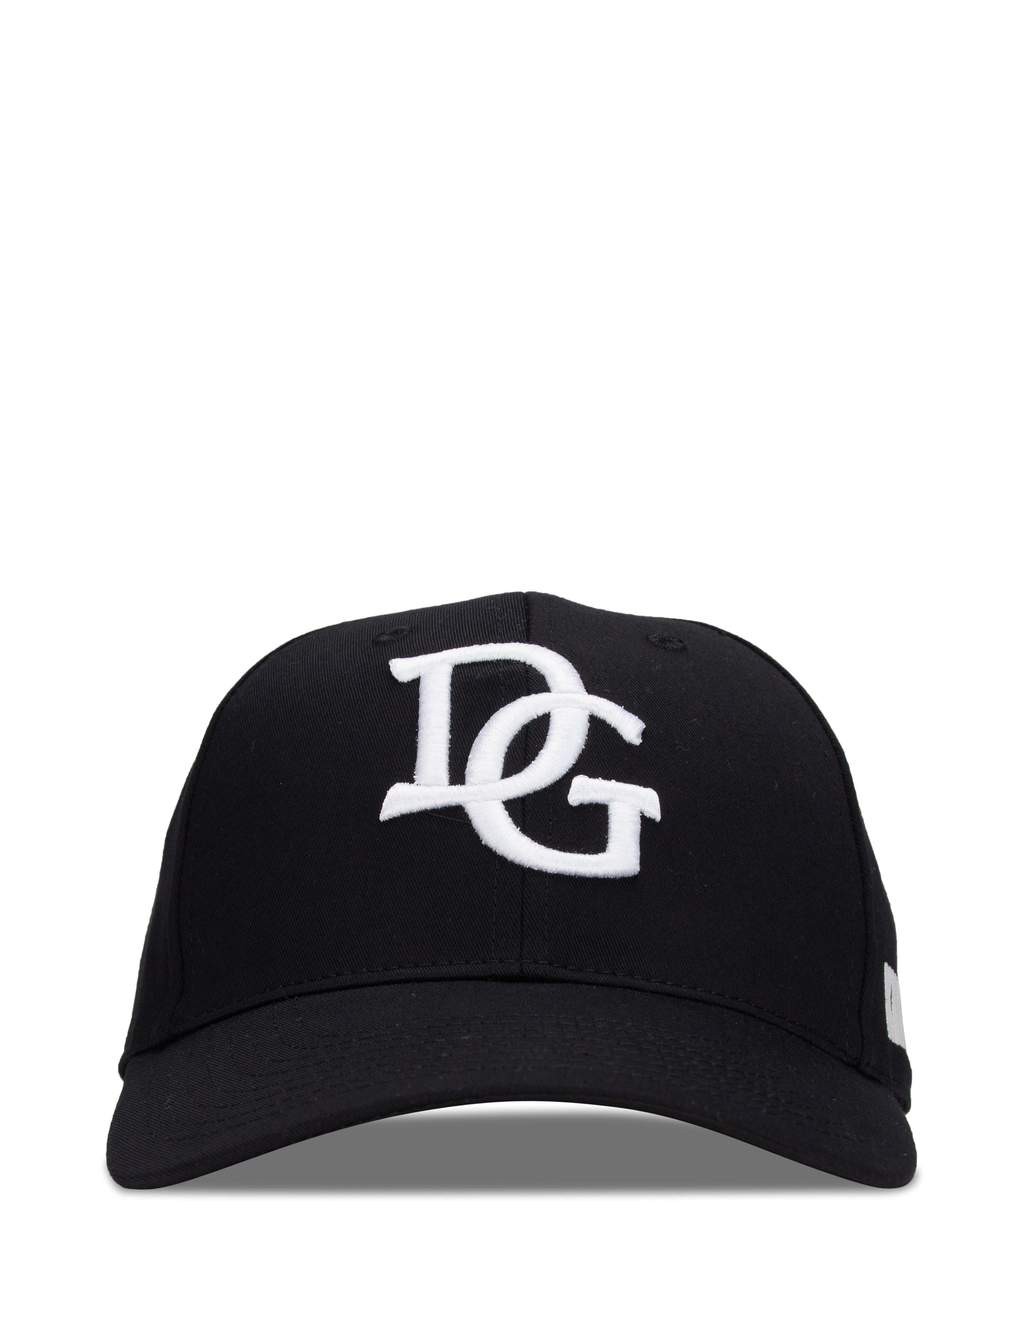 DG Fashion Logo - Dolce&Gabbana Men's Black DG Logo Cap. GIULIOFASHION.COM